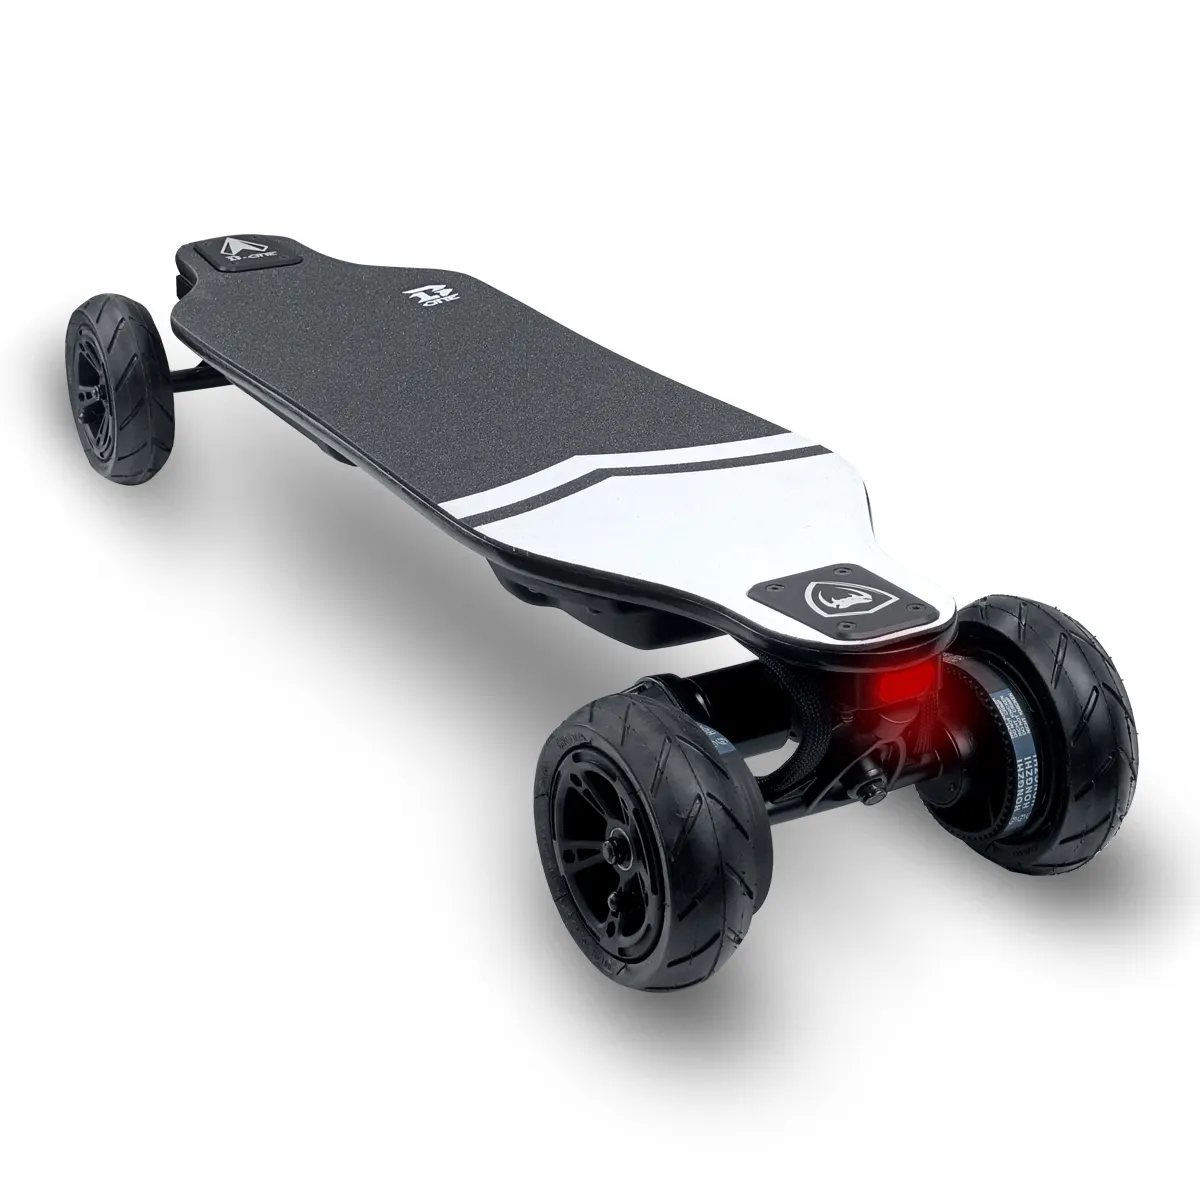 B-ONE electric skateboard/ long board for beginners